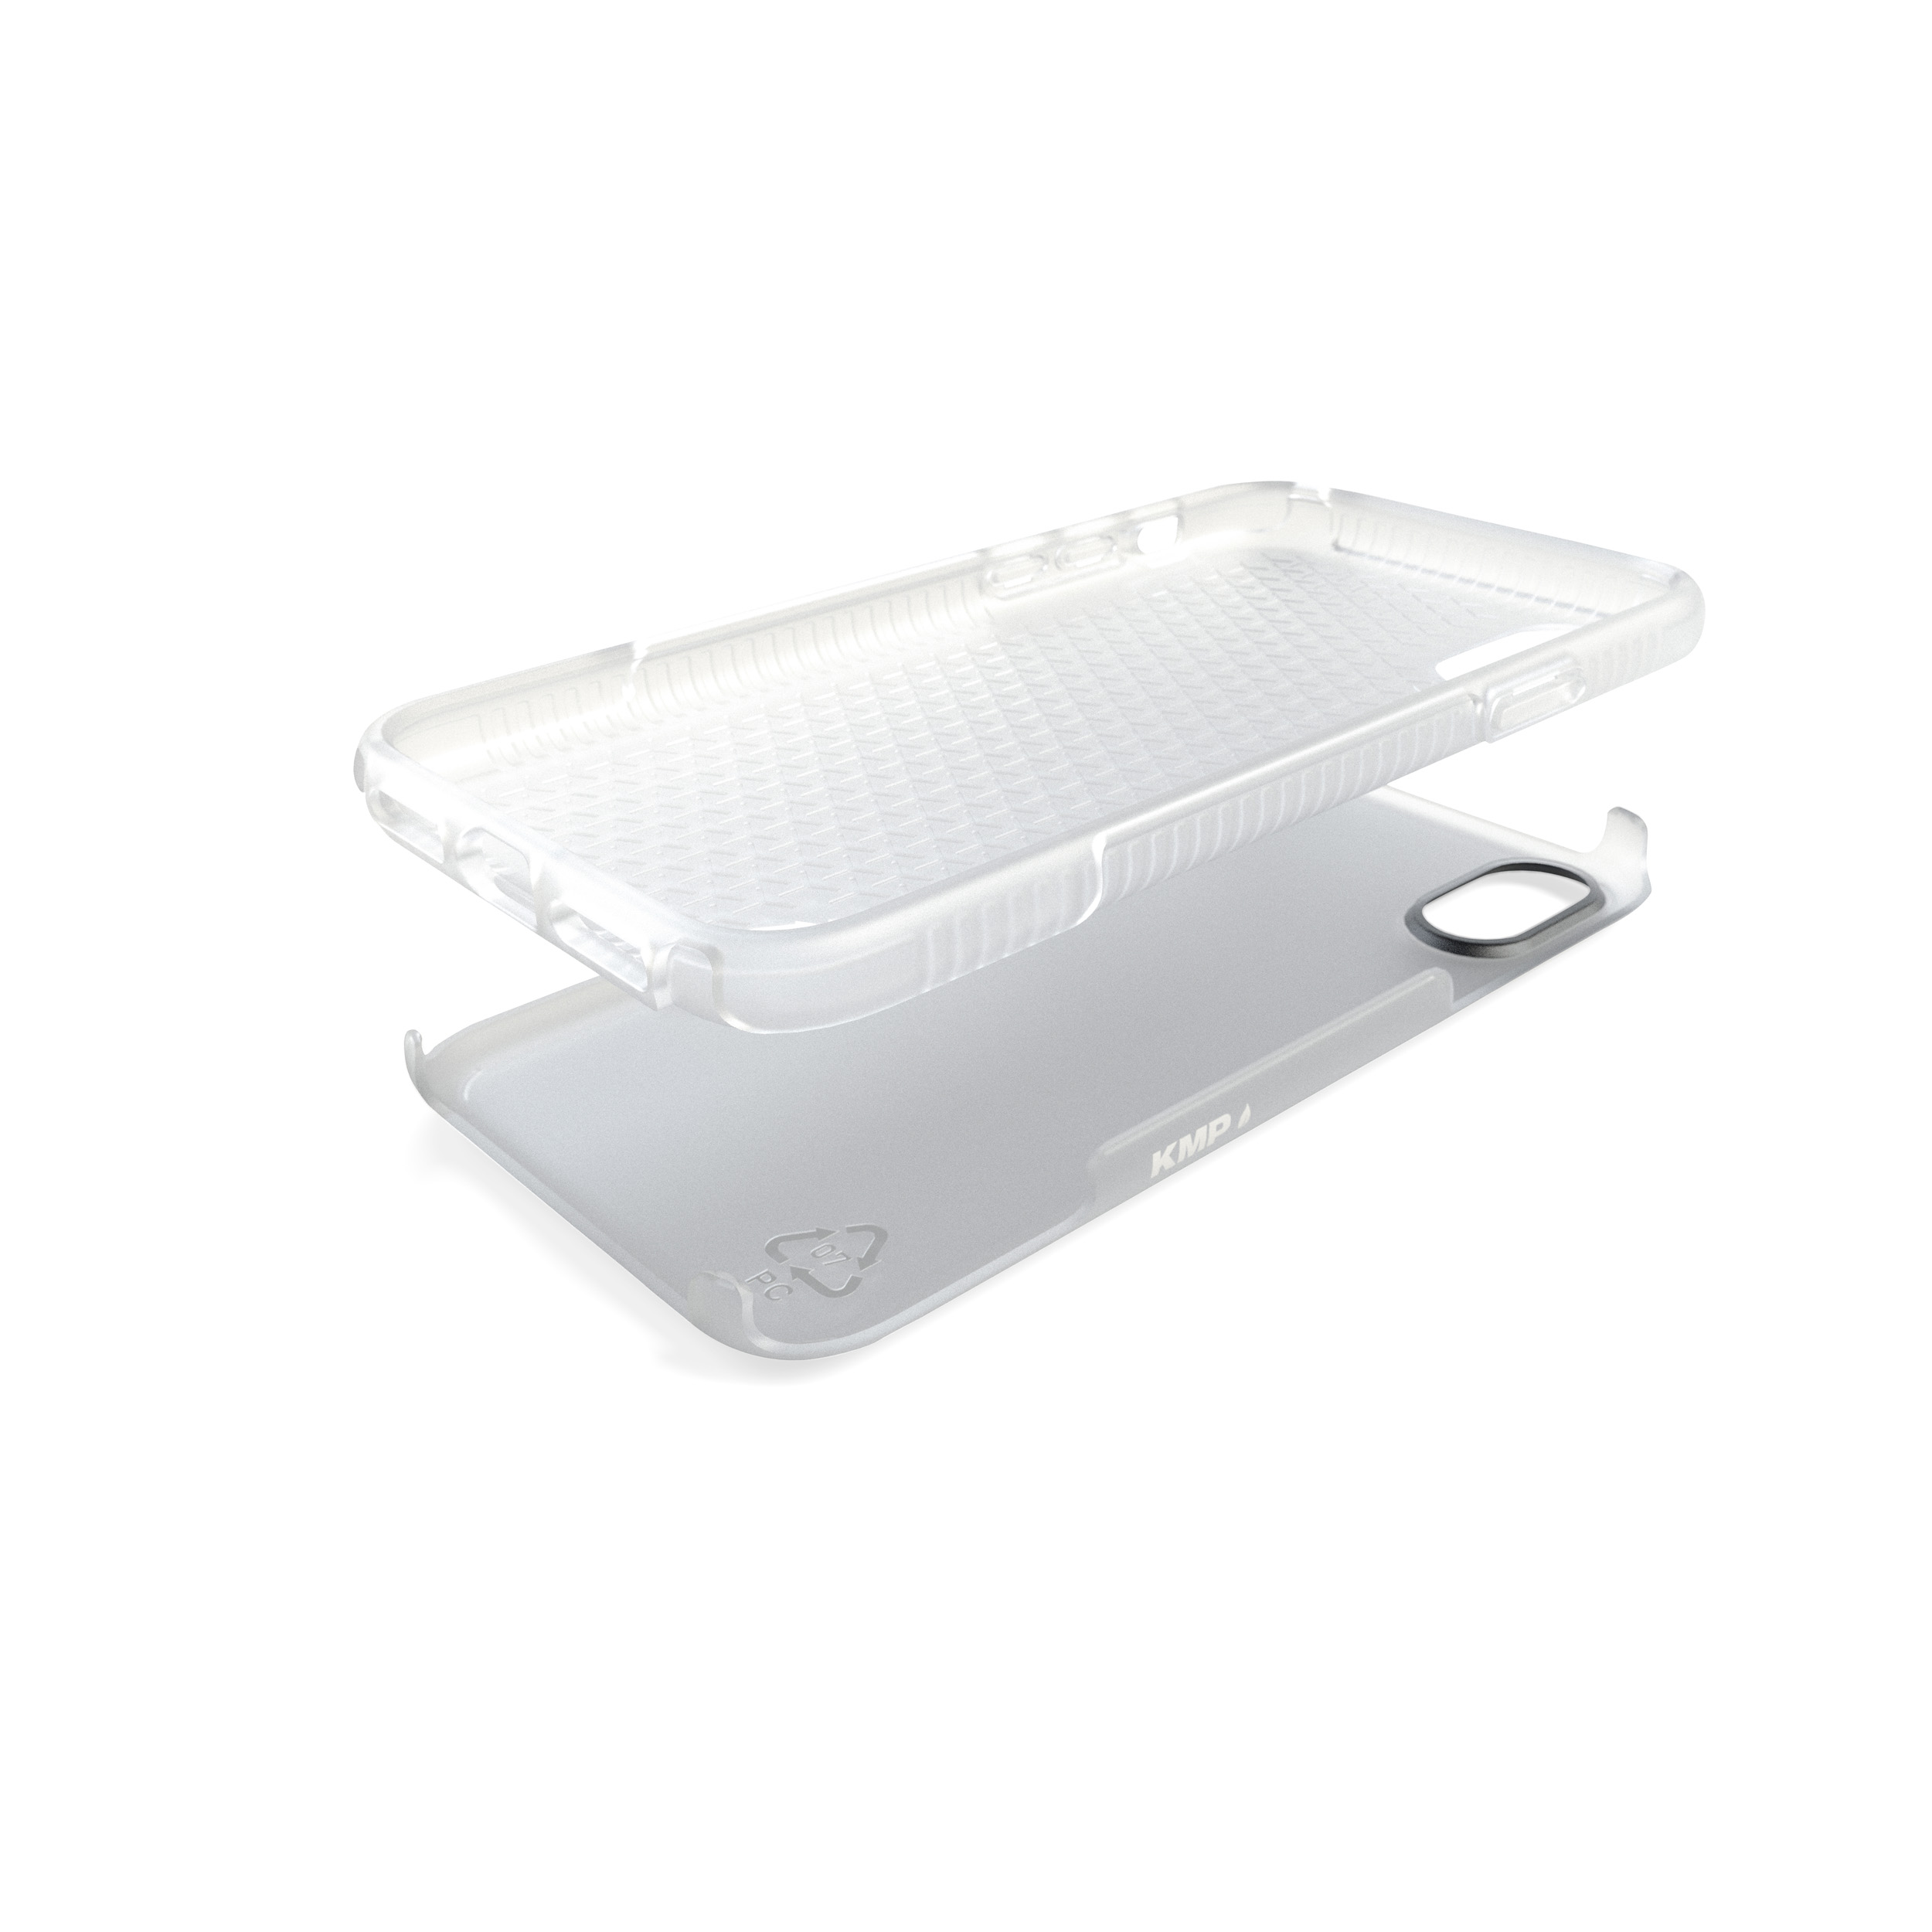 KMP Sporty XS, für Cover, X IPhone Schutzhülle transparent-weiß Transparent, Full XS, Apple, X, iPhone